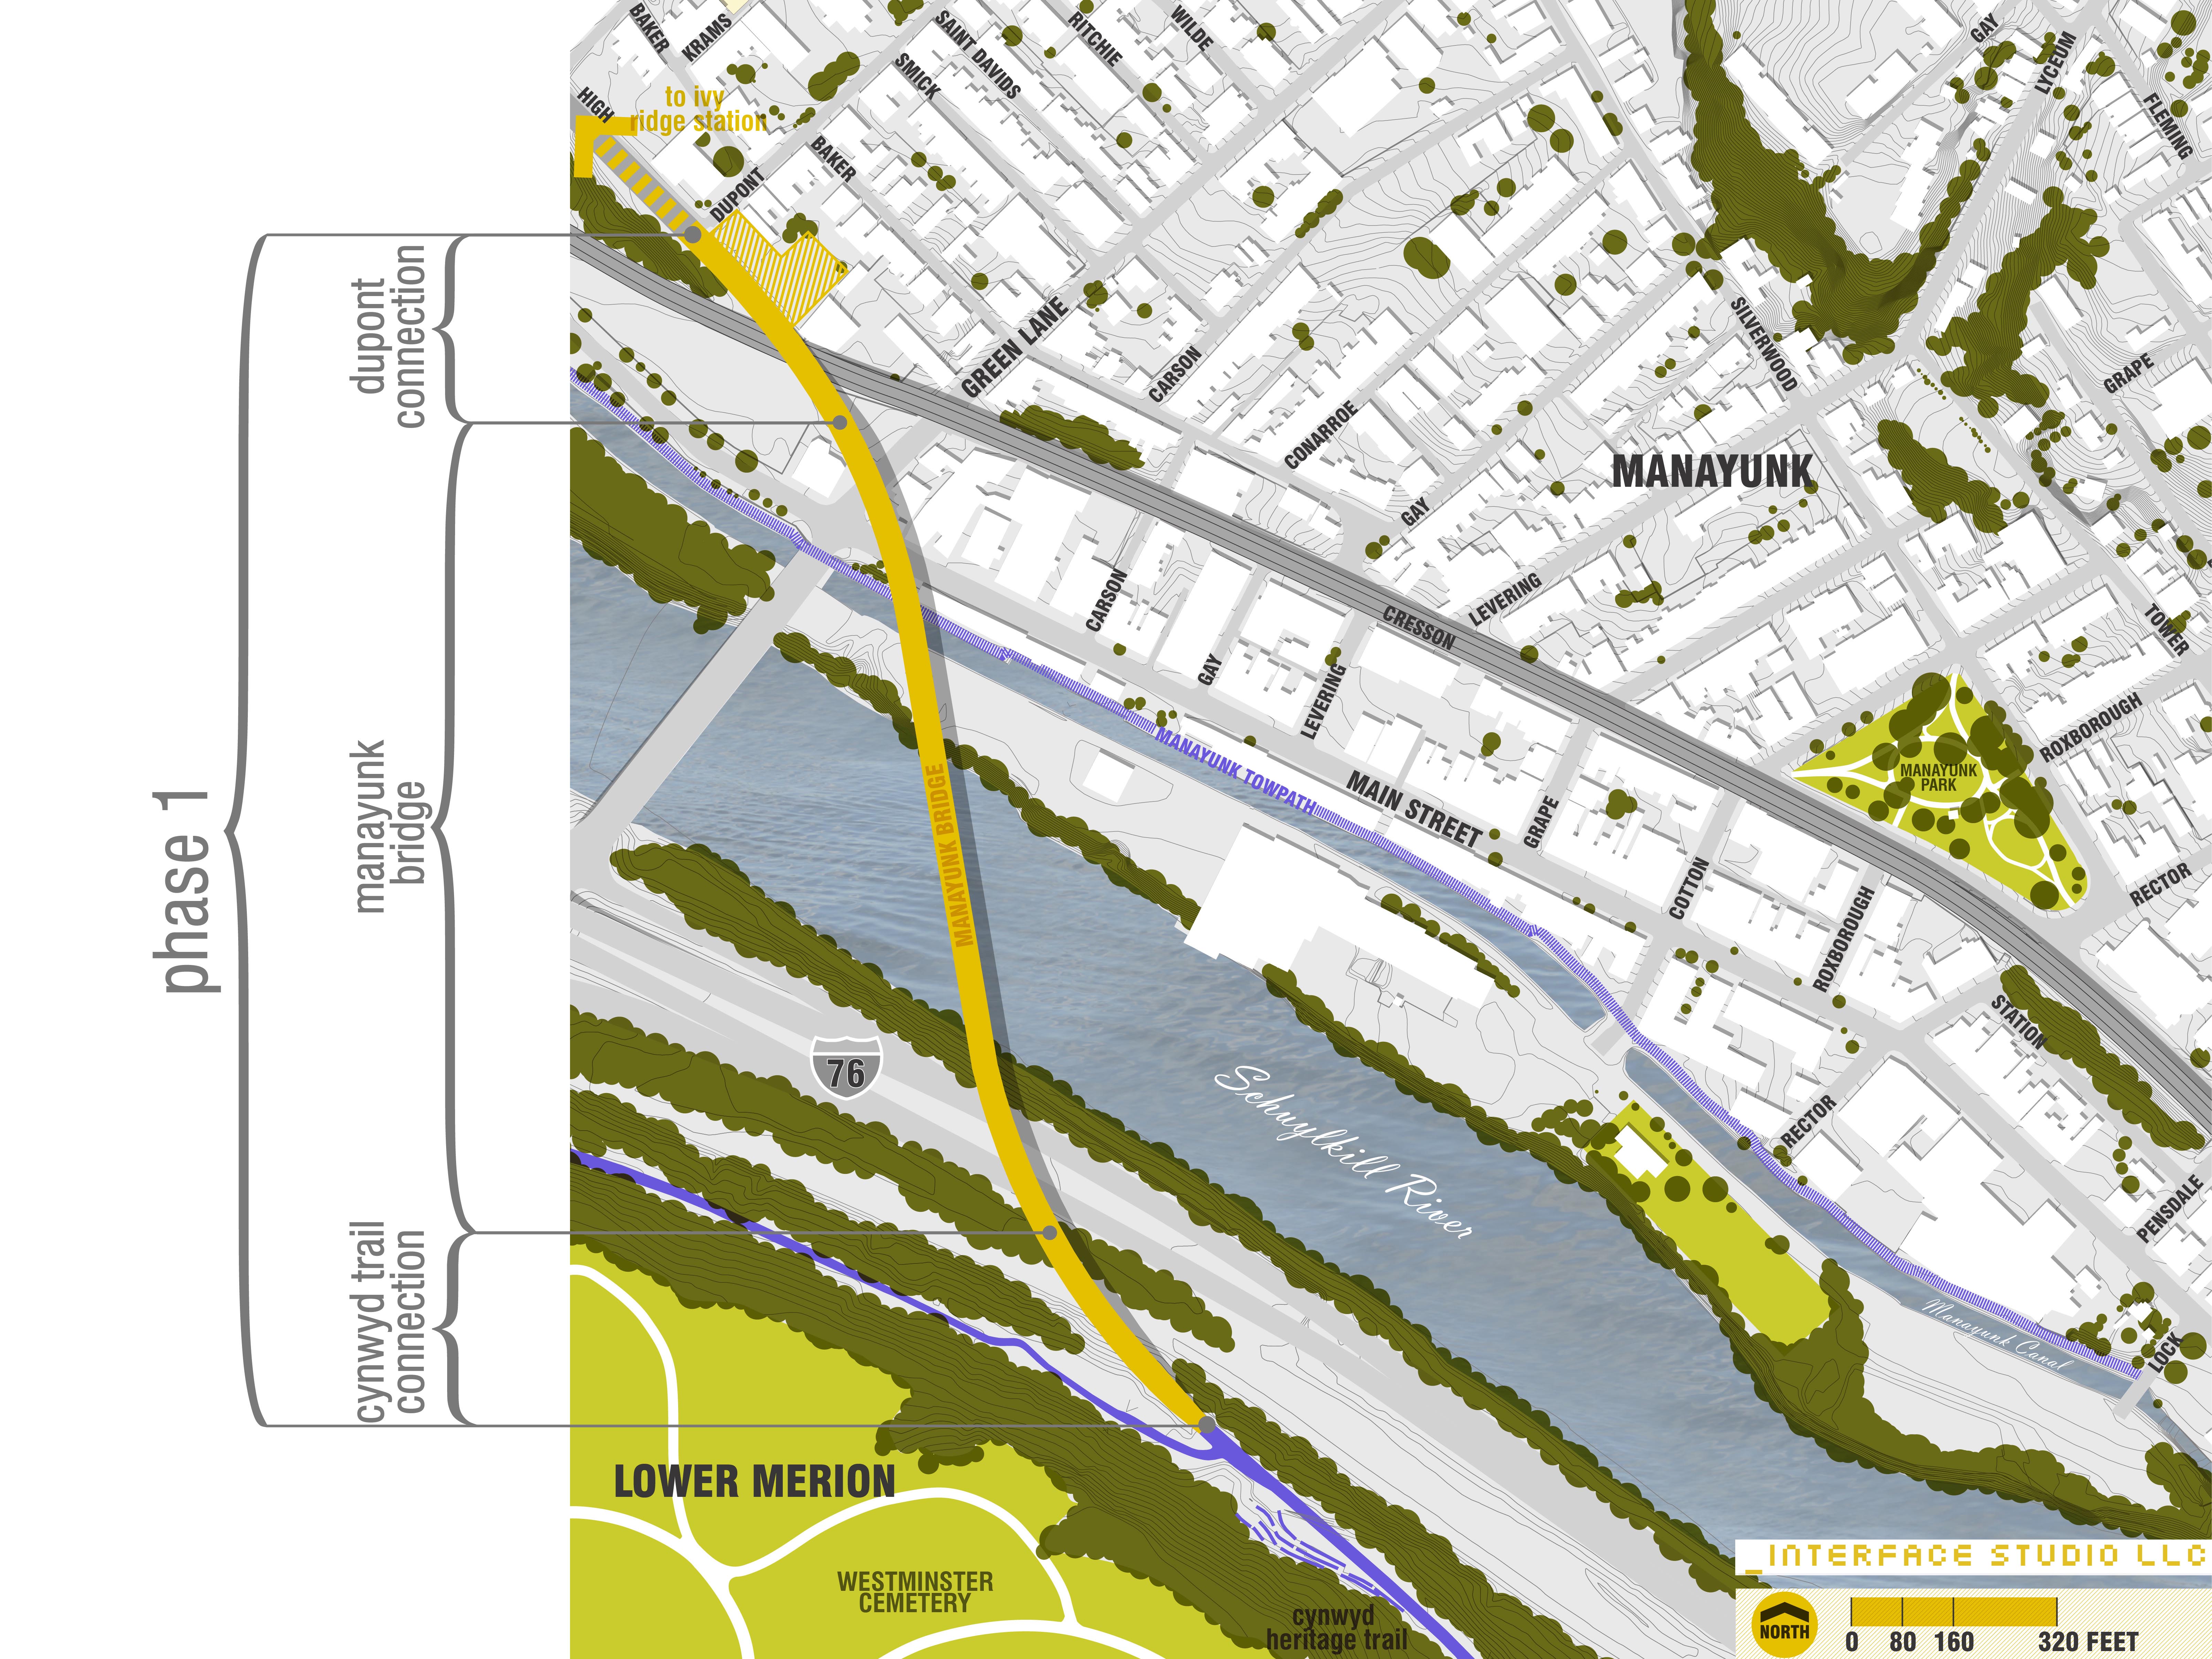 An aerial map shows the three design segments, Photo courtesy of Interface Studio LLC